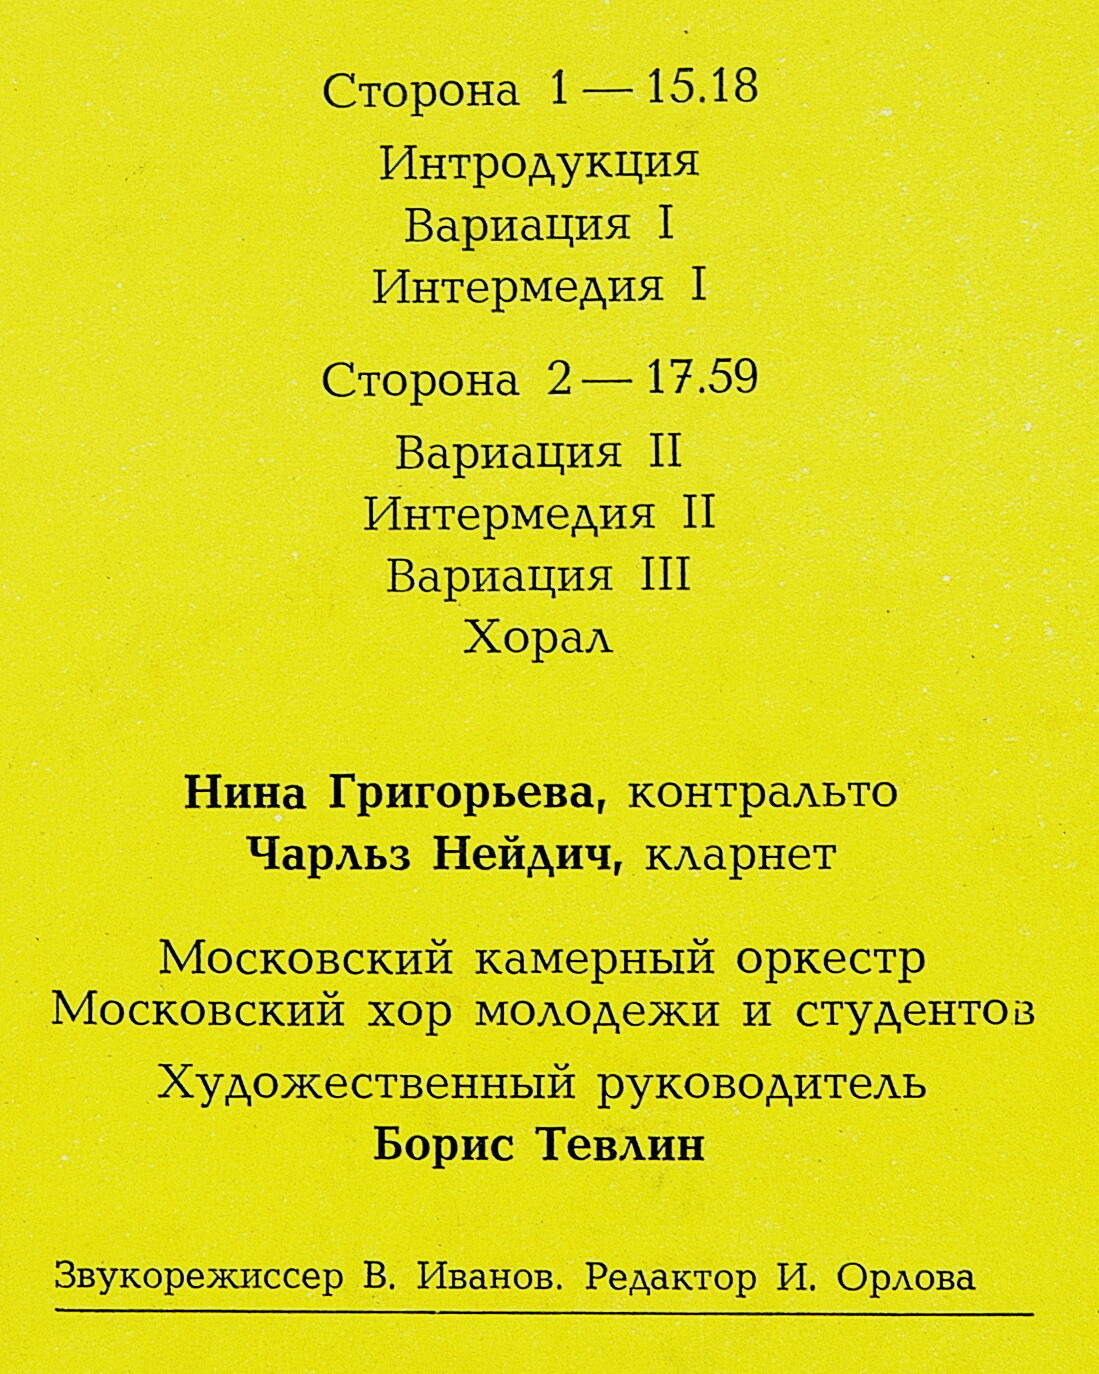 А. ЛОКШИН (1920). Симфония № 10